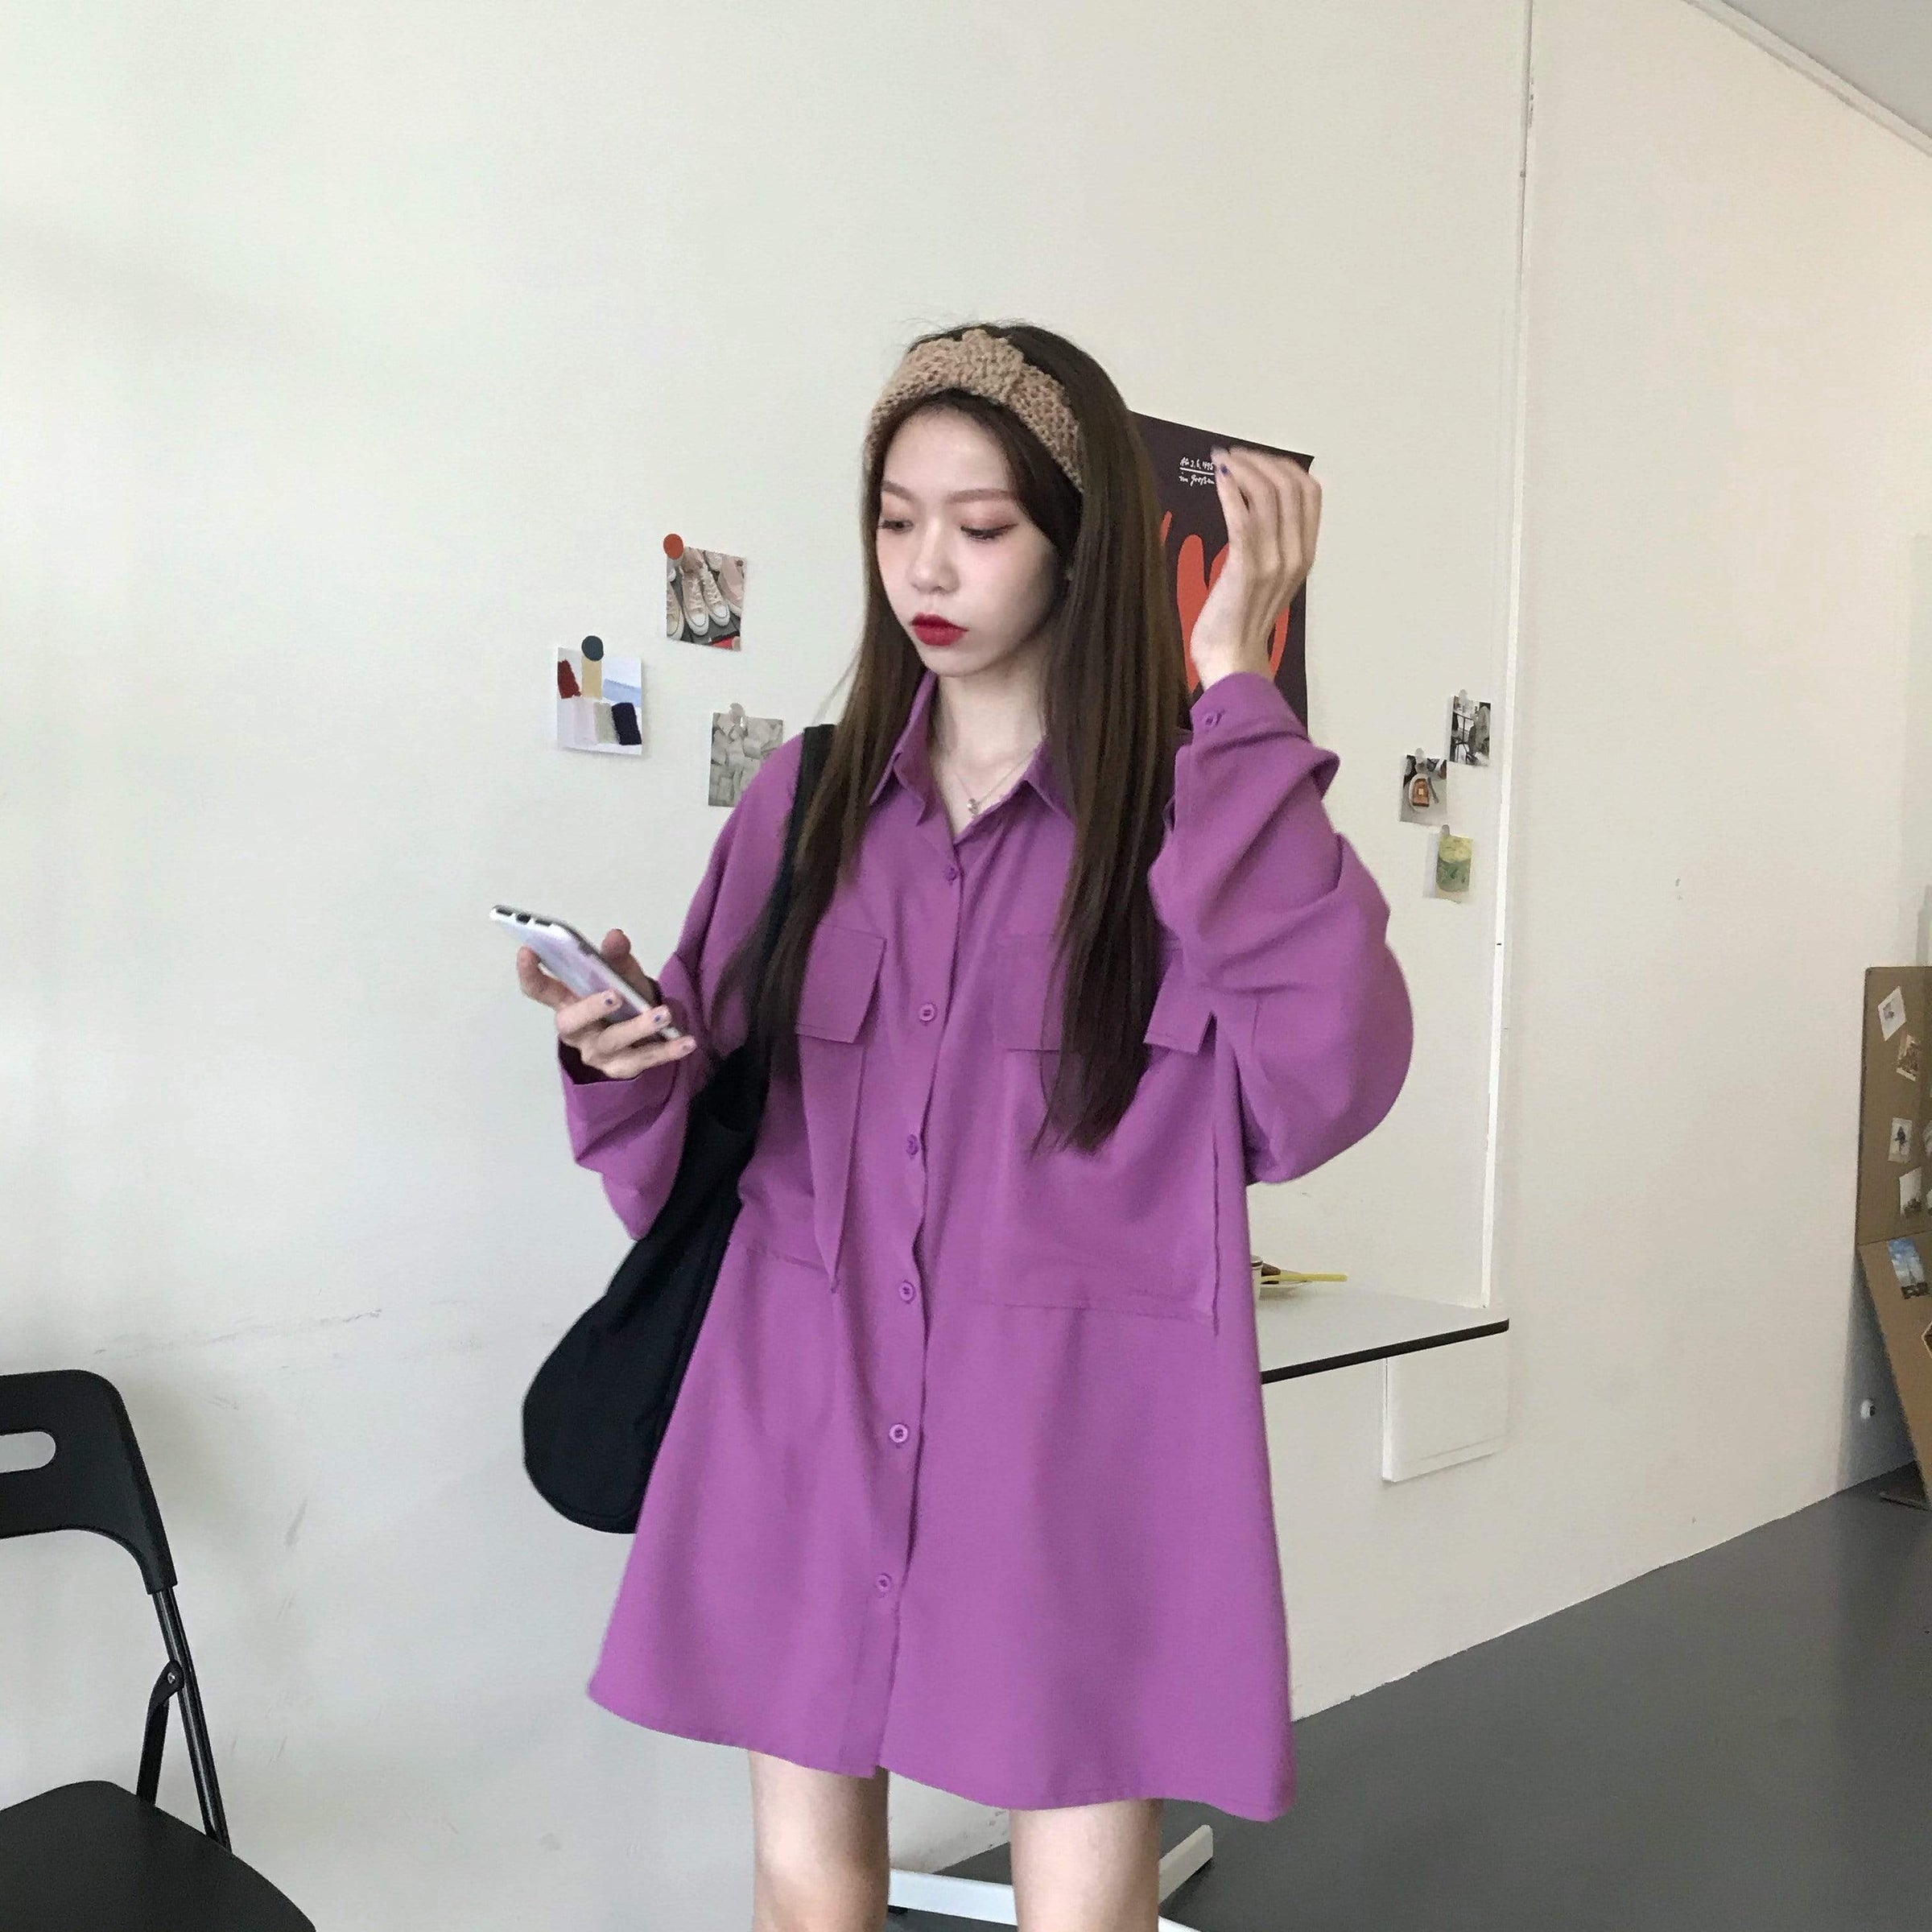 Camisas largas de moda coreana para mujer con dos bolsillos grandes